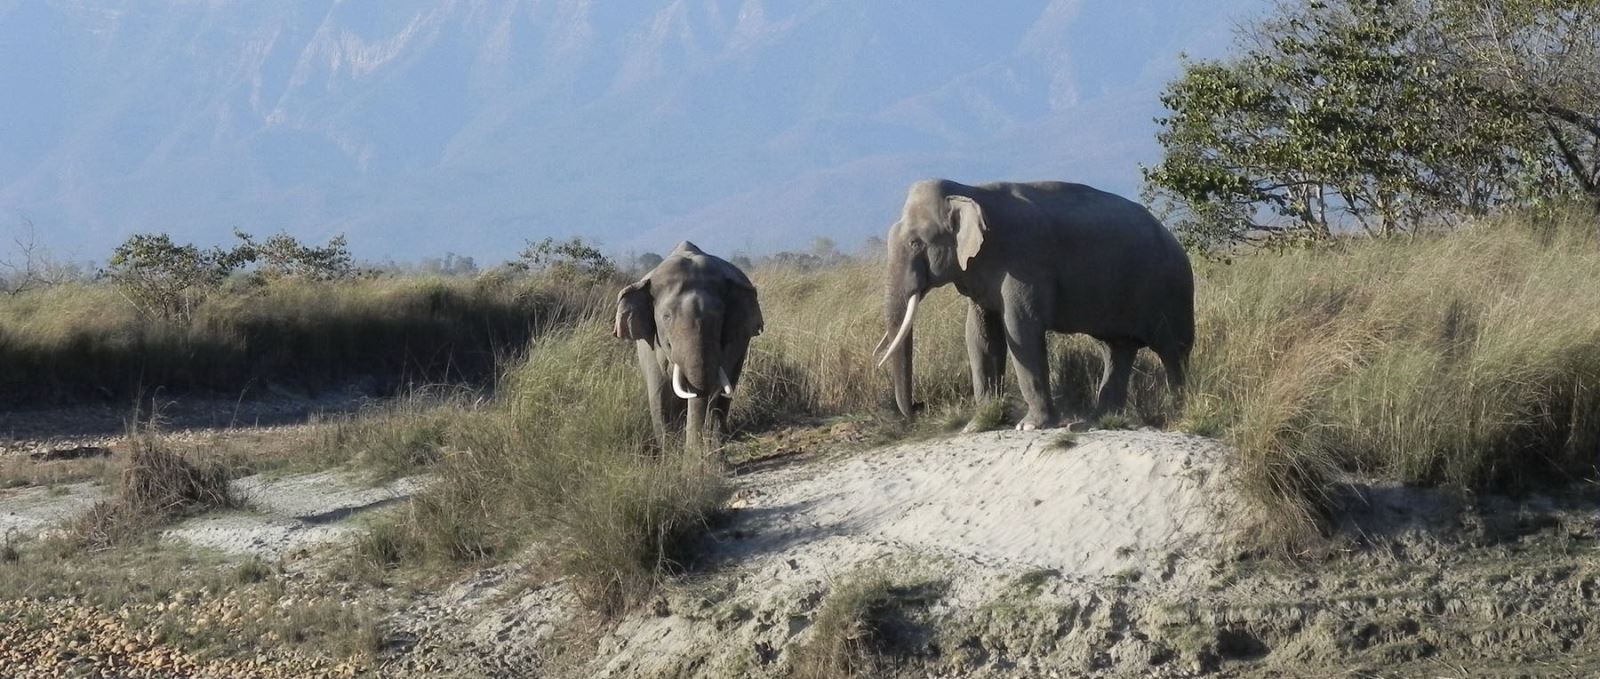 Elephant at Bardiya National Park